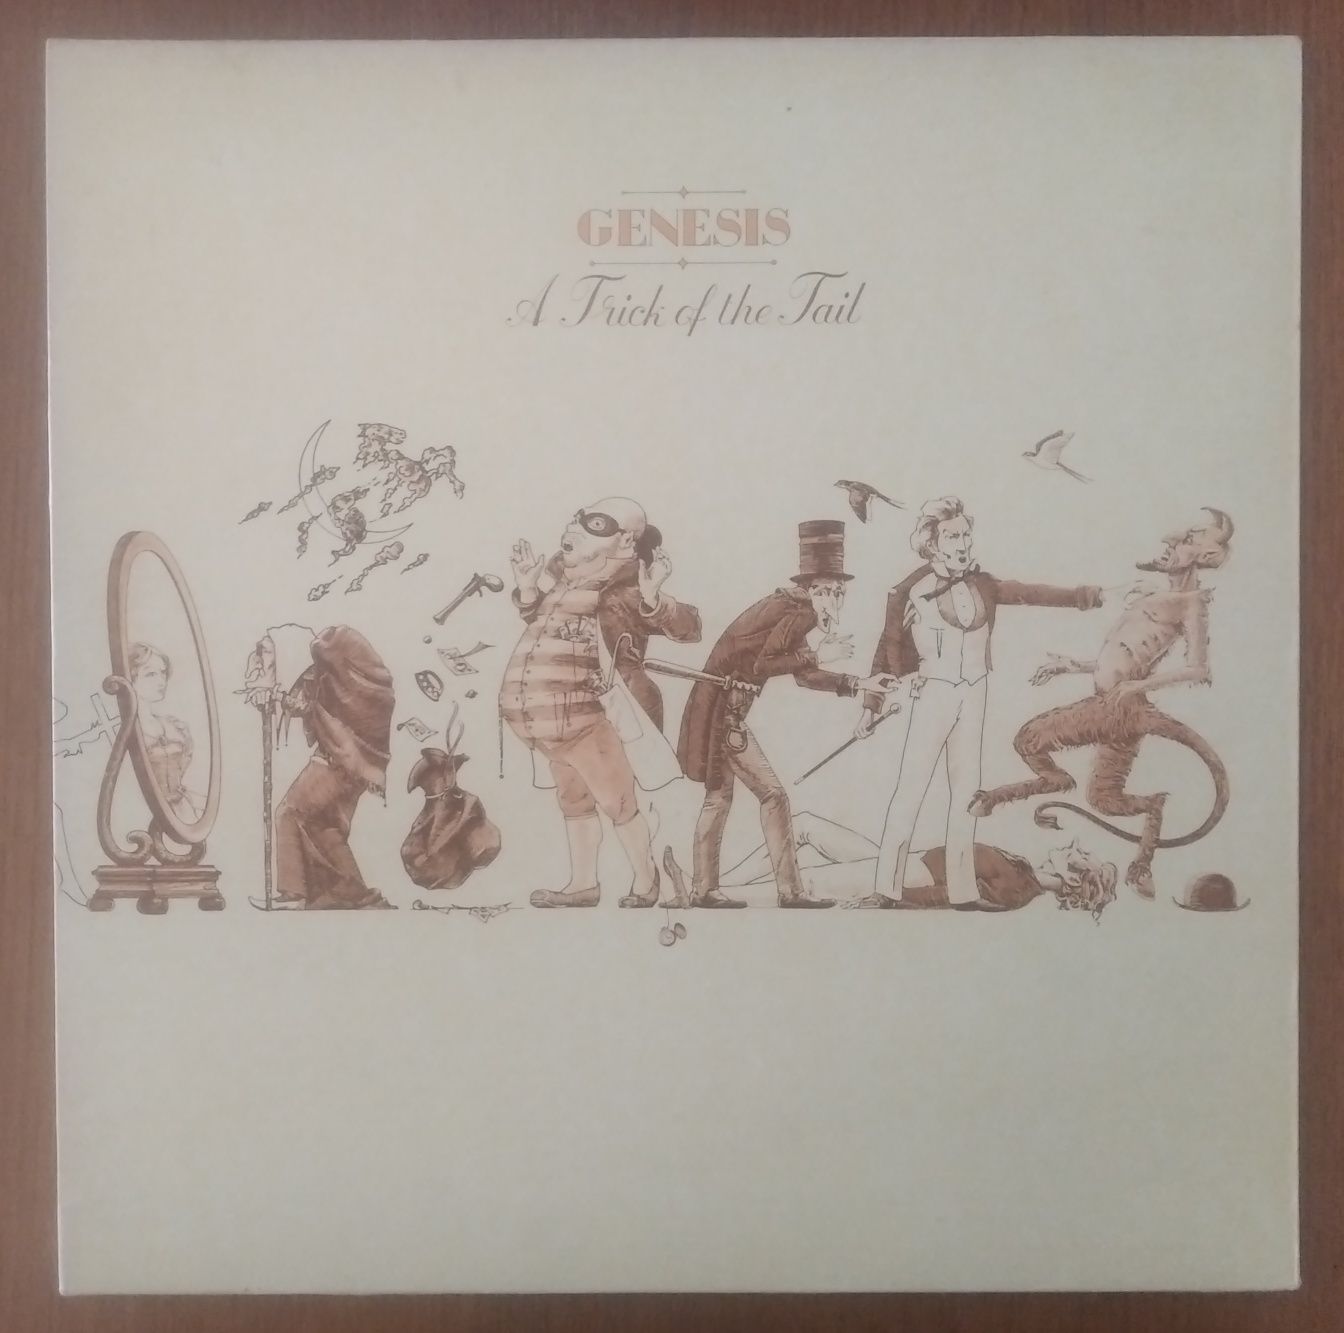 Genesis disco de vinil "A Trick Of The Tail".